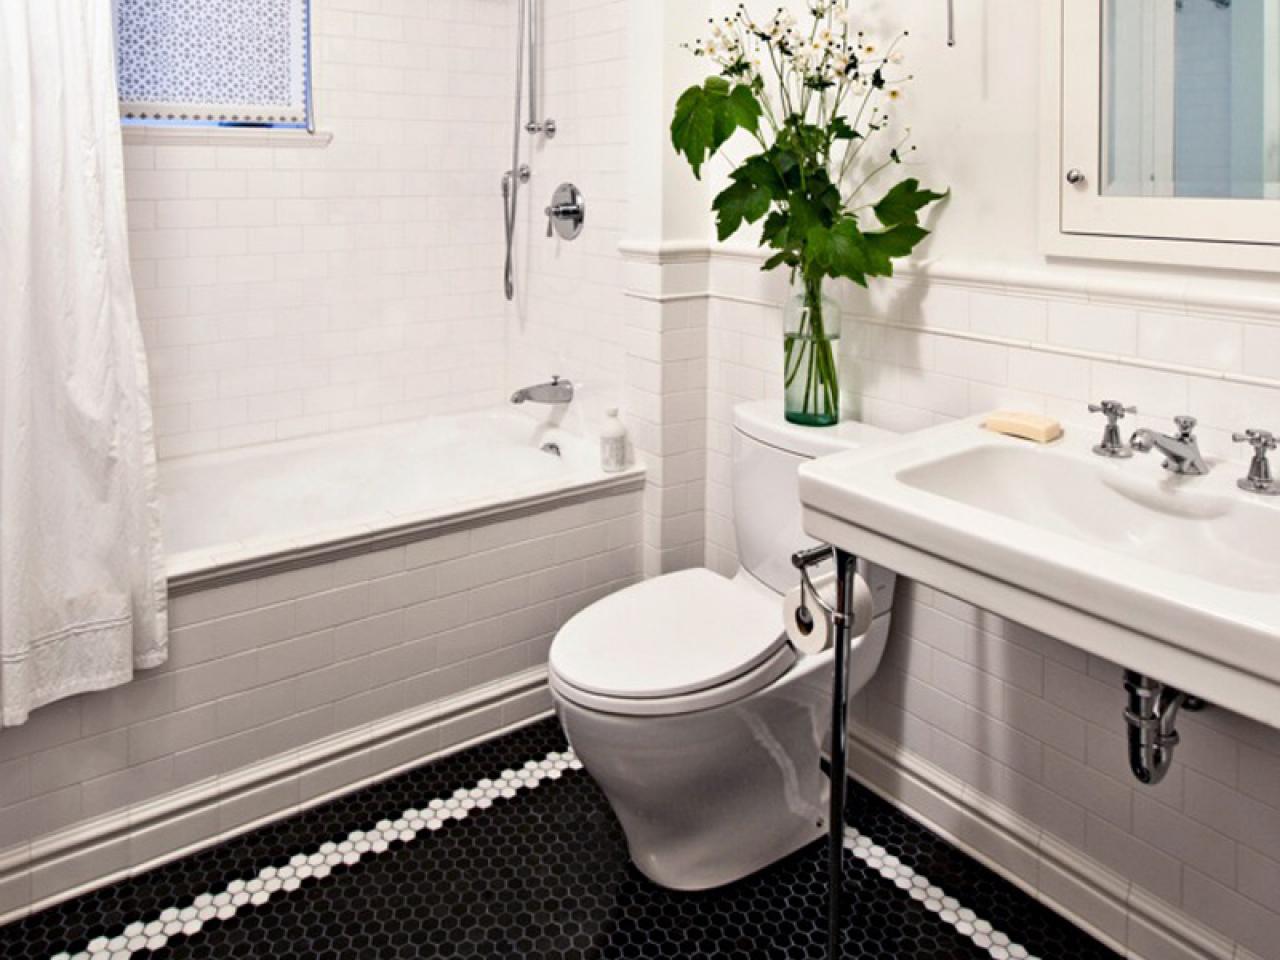 Original_Bathroom-Tile-Jessica-Helgerson-Black-White-Tile_s4x3.jpg.rend.hgtvcom.1280.960